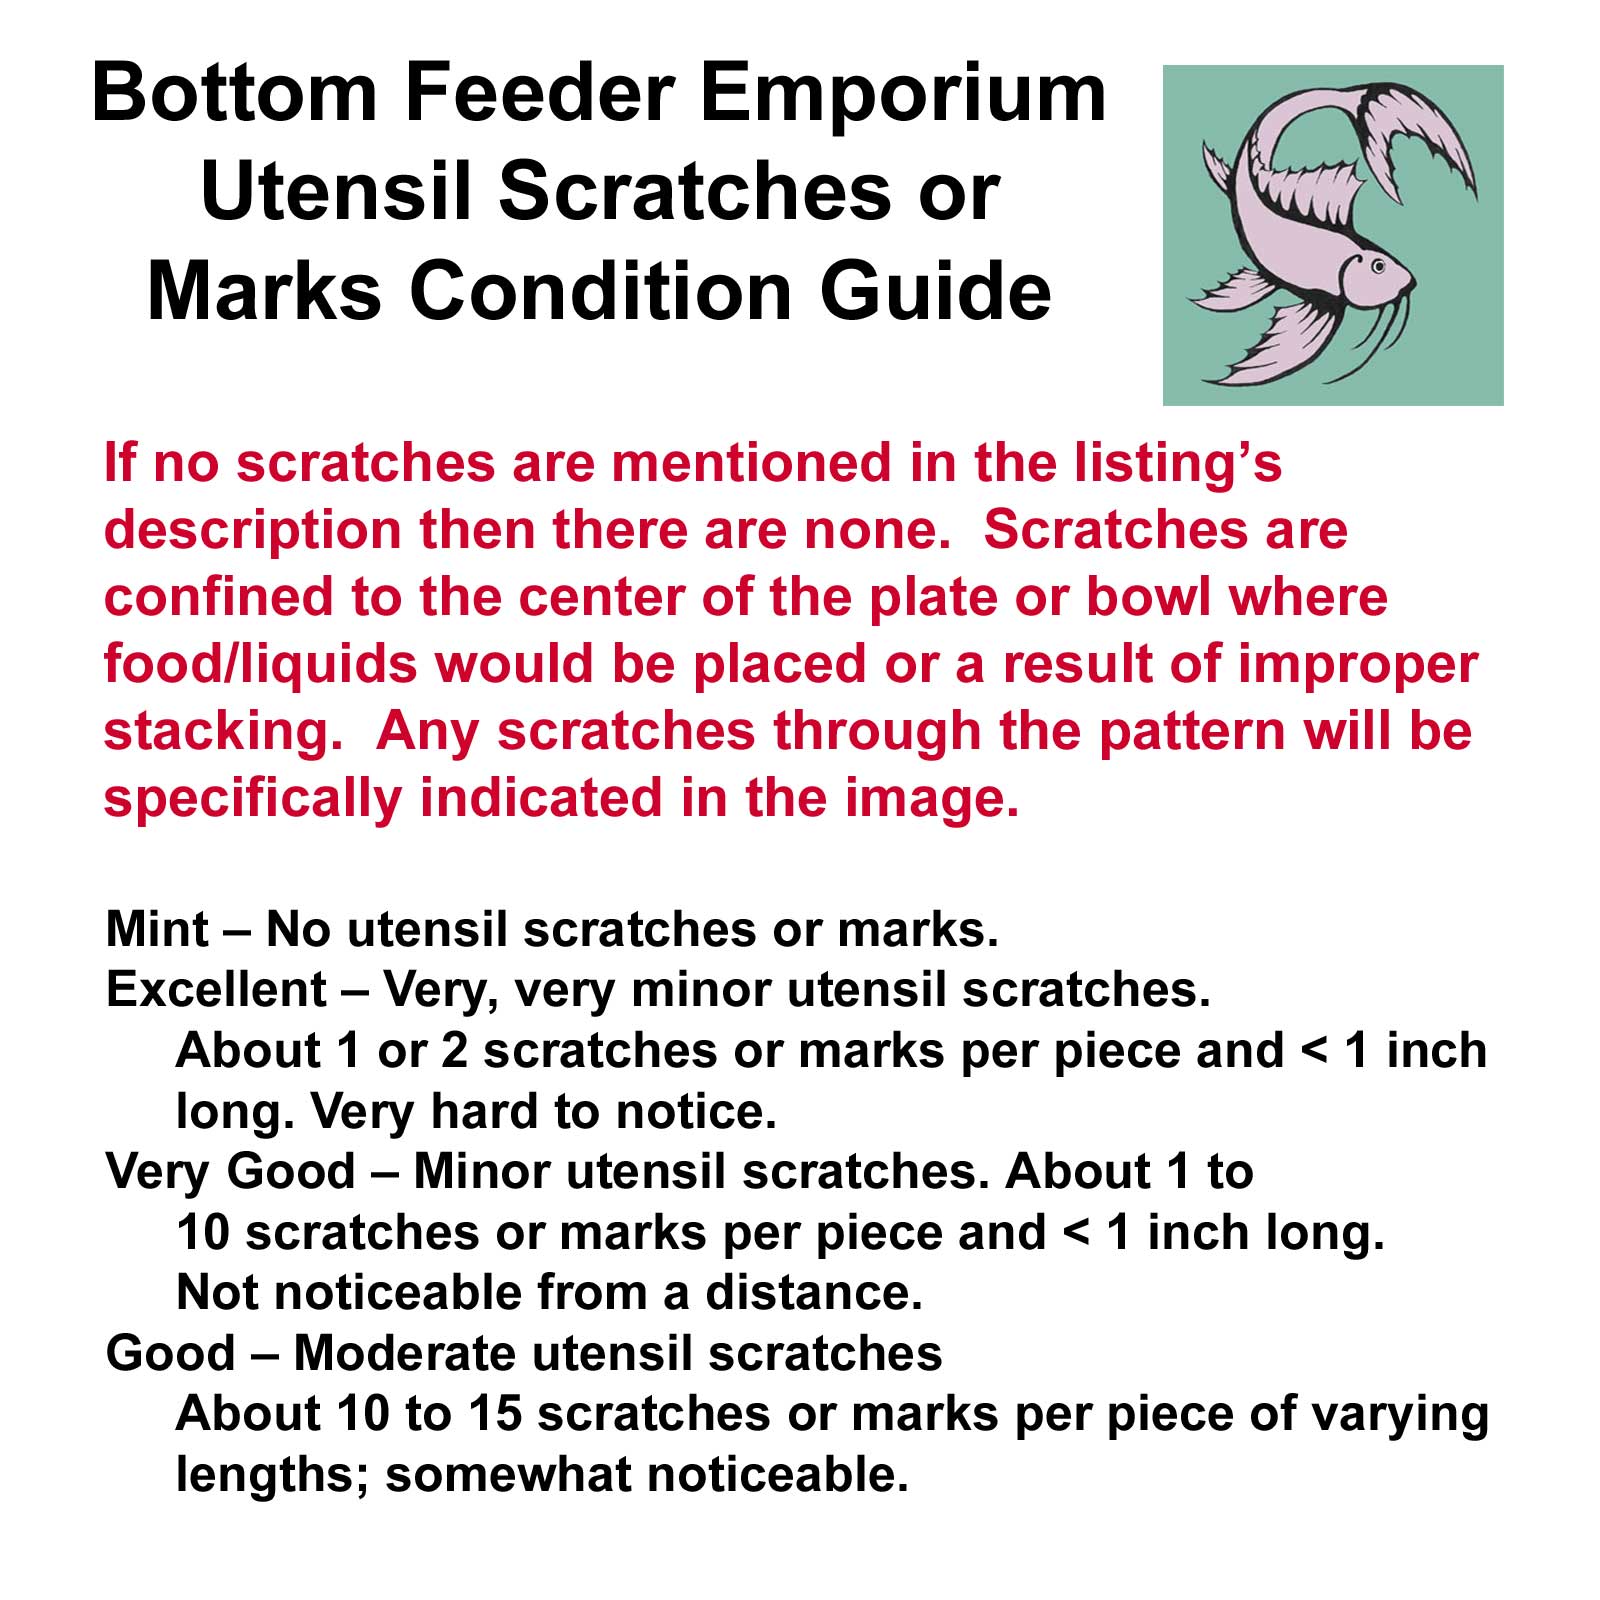 Bottom Feeder Emporium Dinnerware Utensil Scratches or Marks Guide